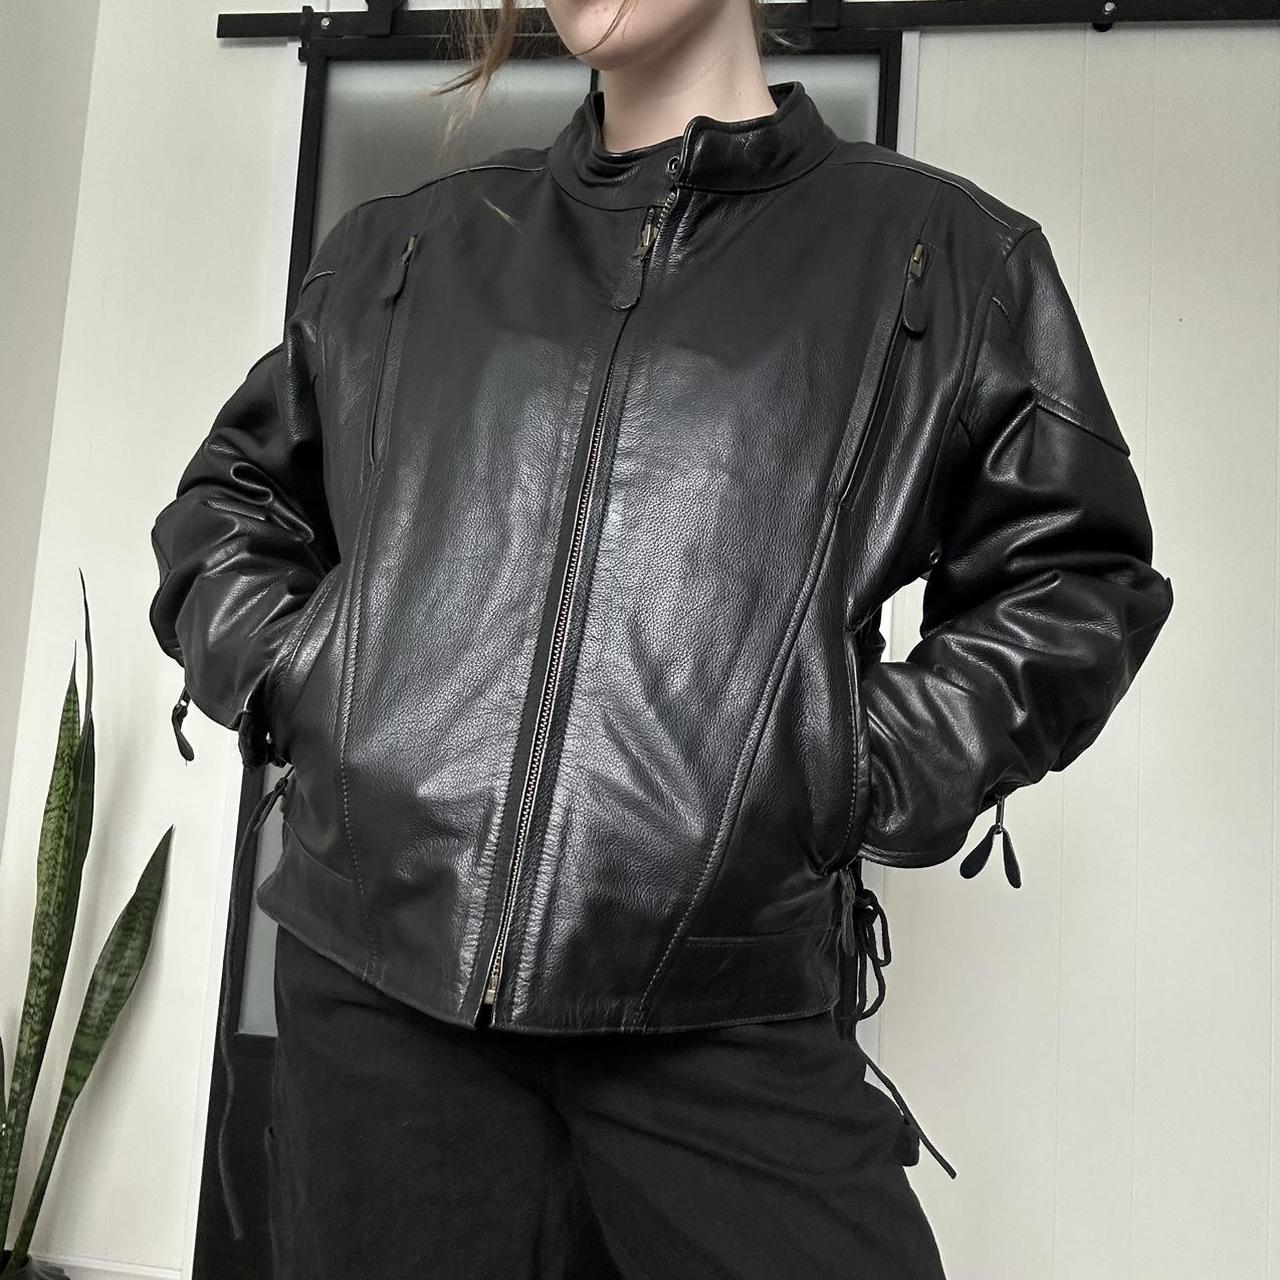 🔥Vintage Genuine Leather Motorcycle Jacket with Lace... - Depop